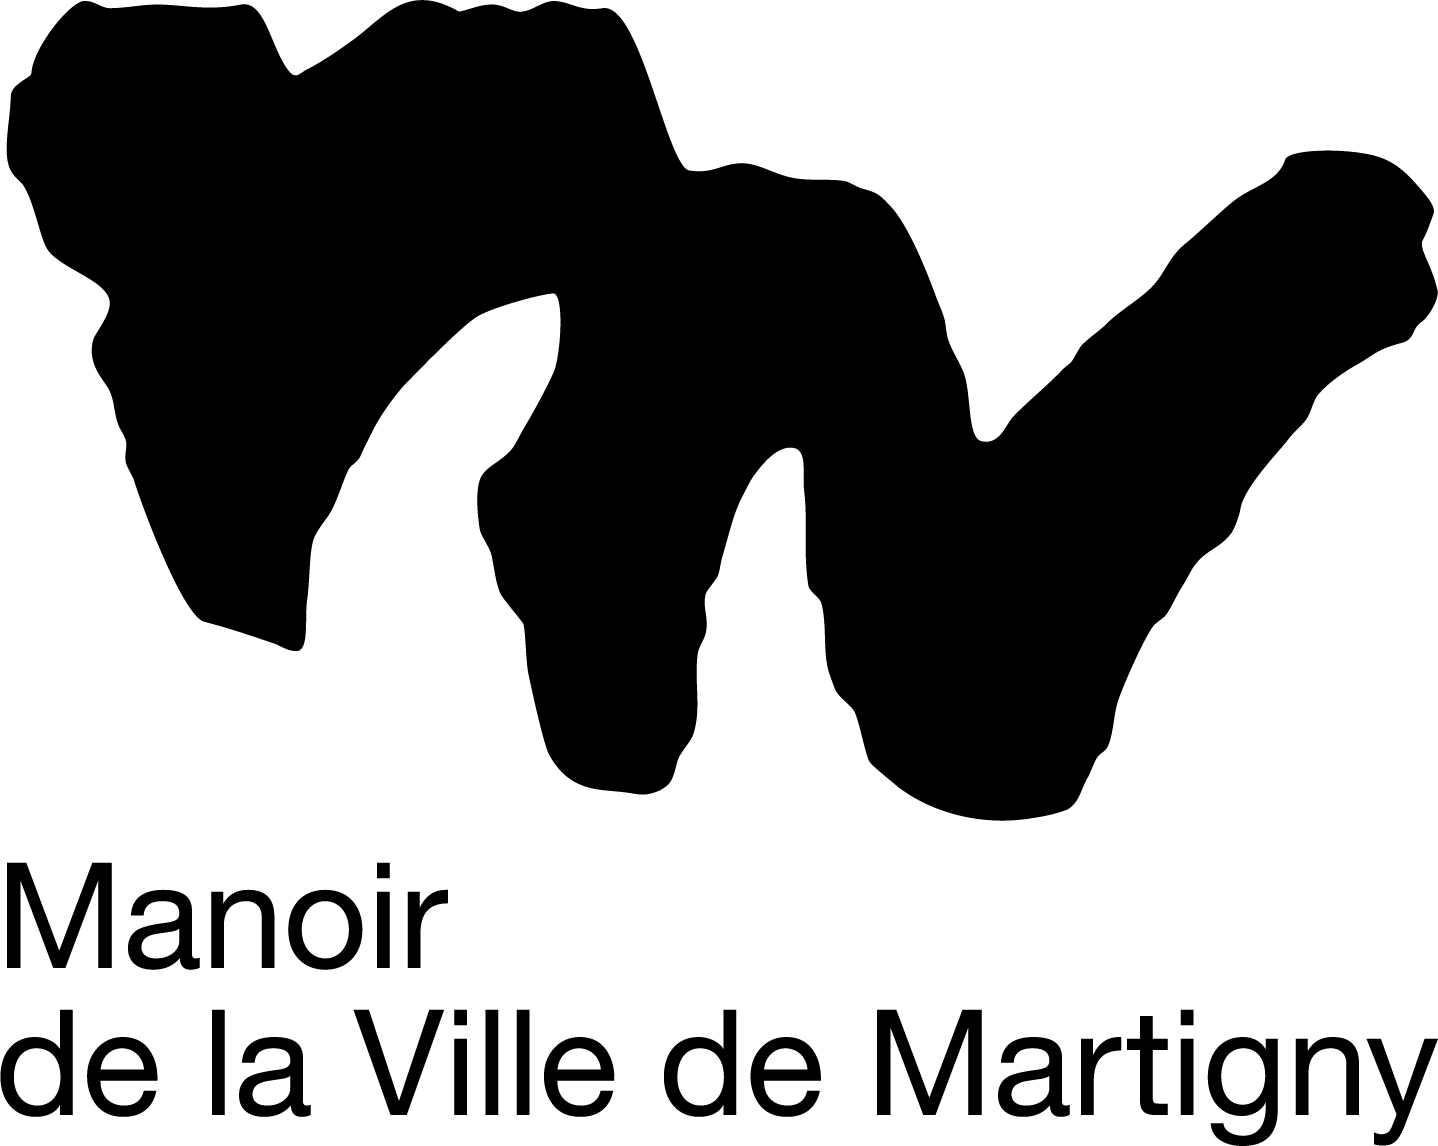 Le Manoir de la Ville de Martigny